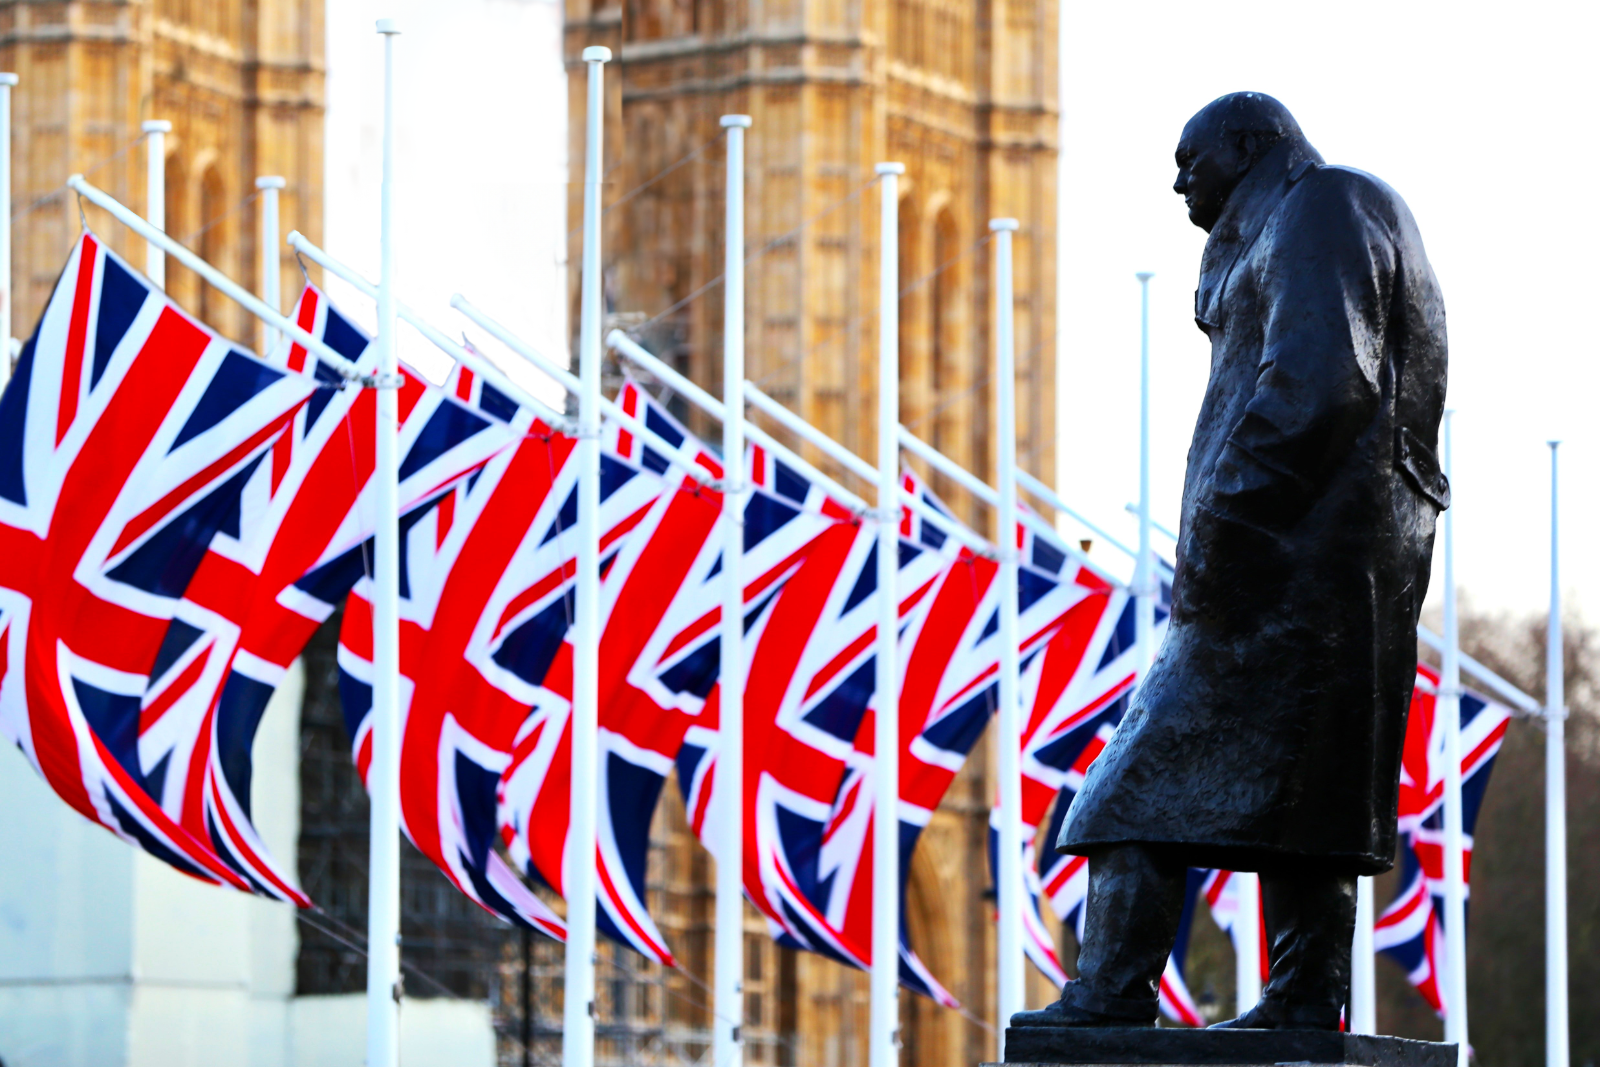 Statue of Winston Churchill amongst flags in London